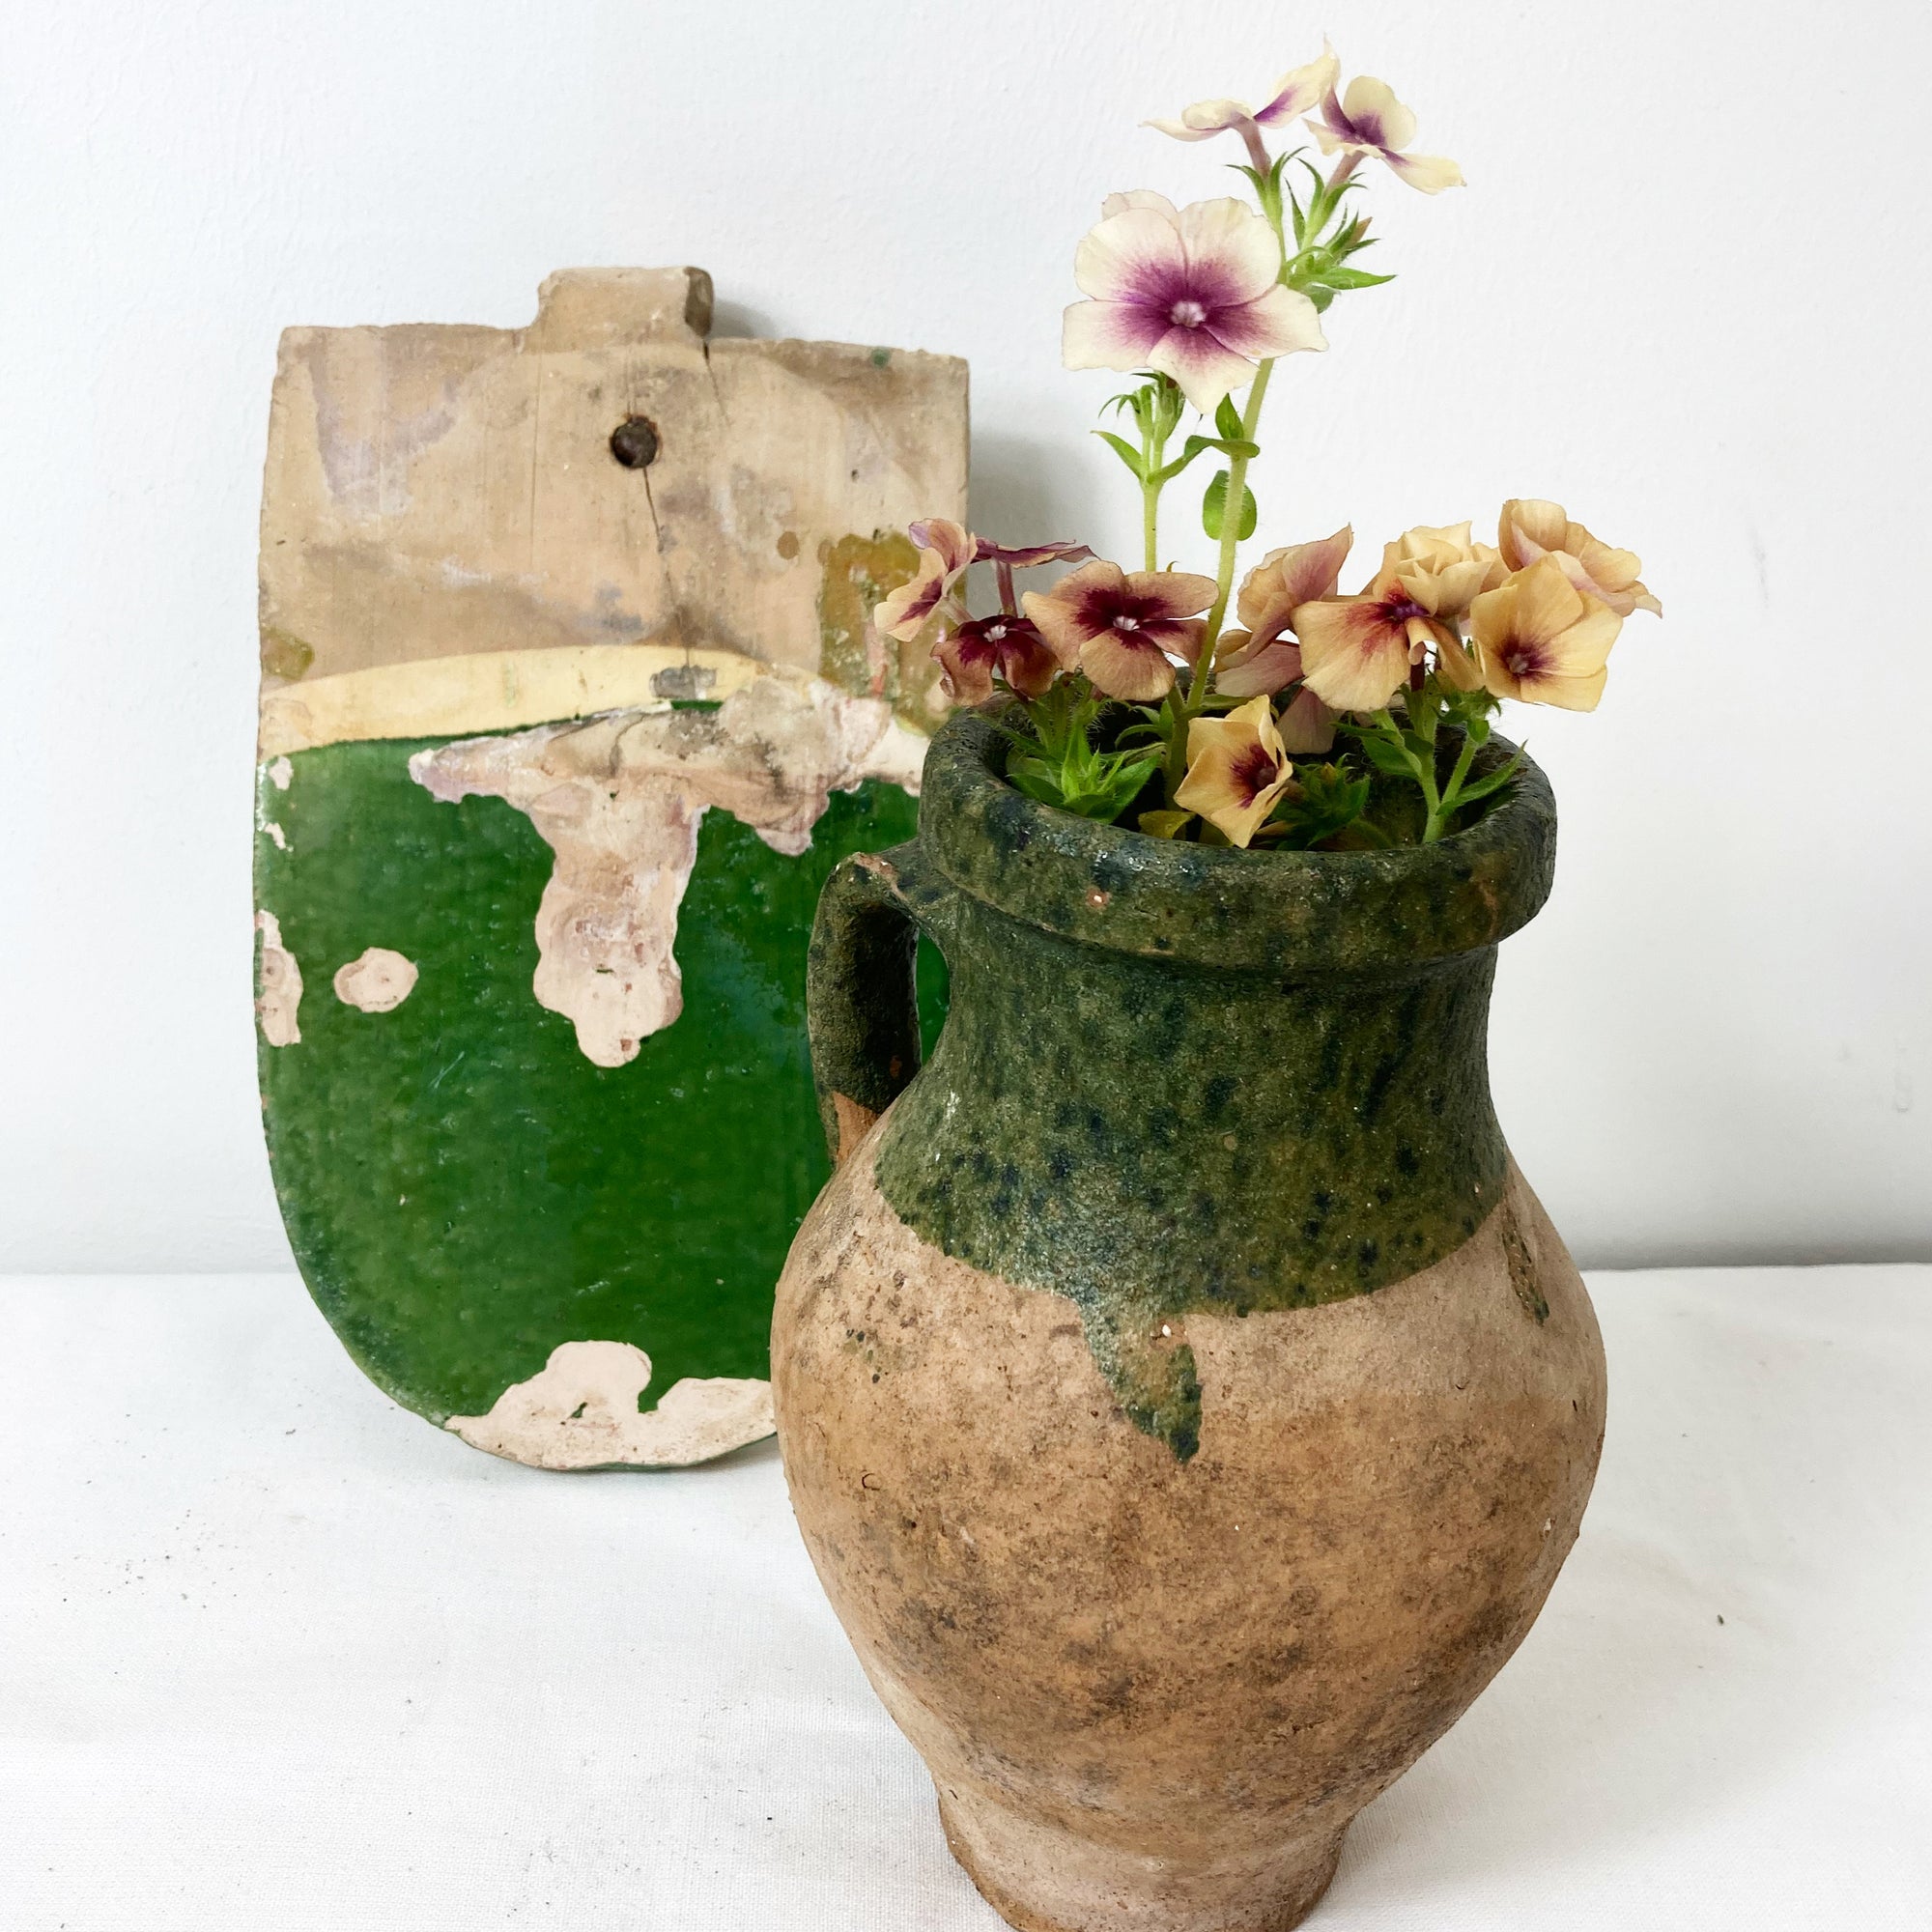 Rustic and antique pots, bowls & urns